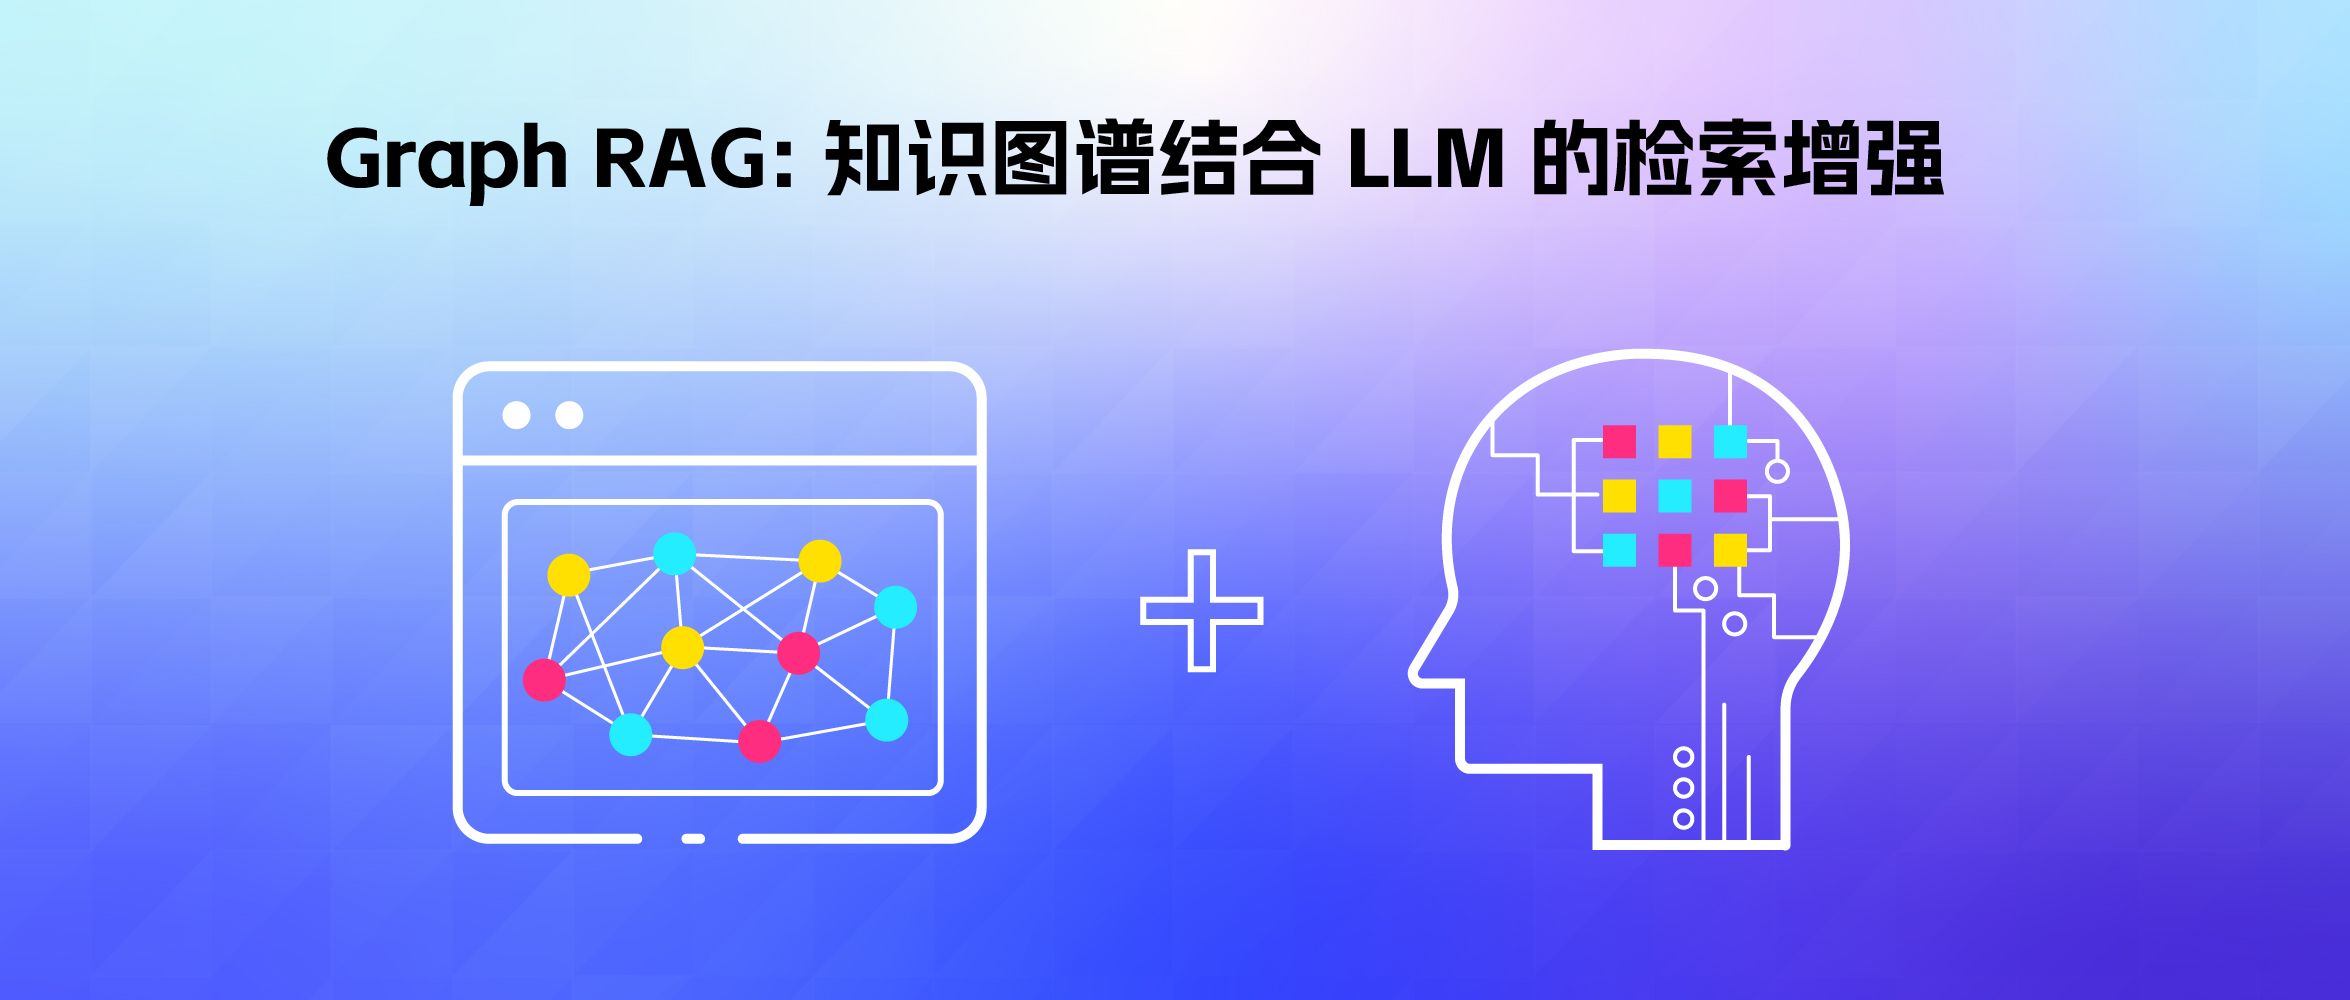 Graph RAG: 知识图谱结合 LLM 的检索增强